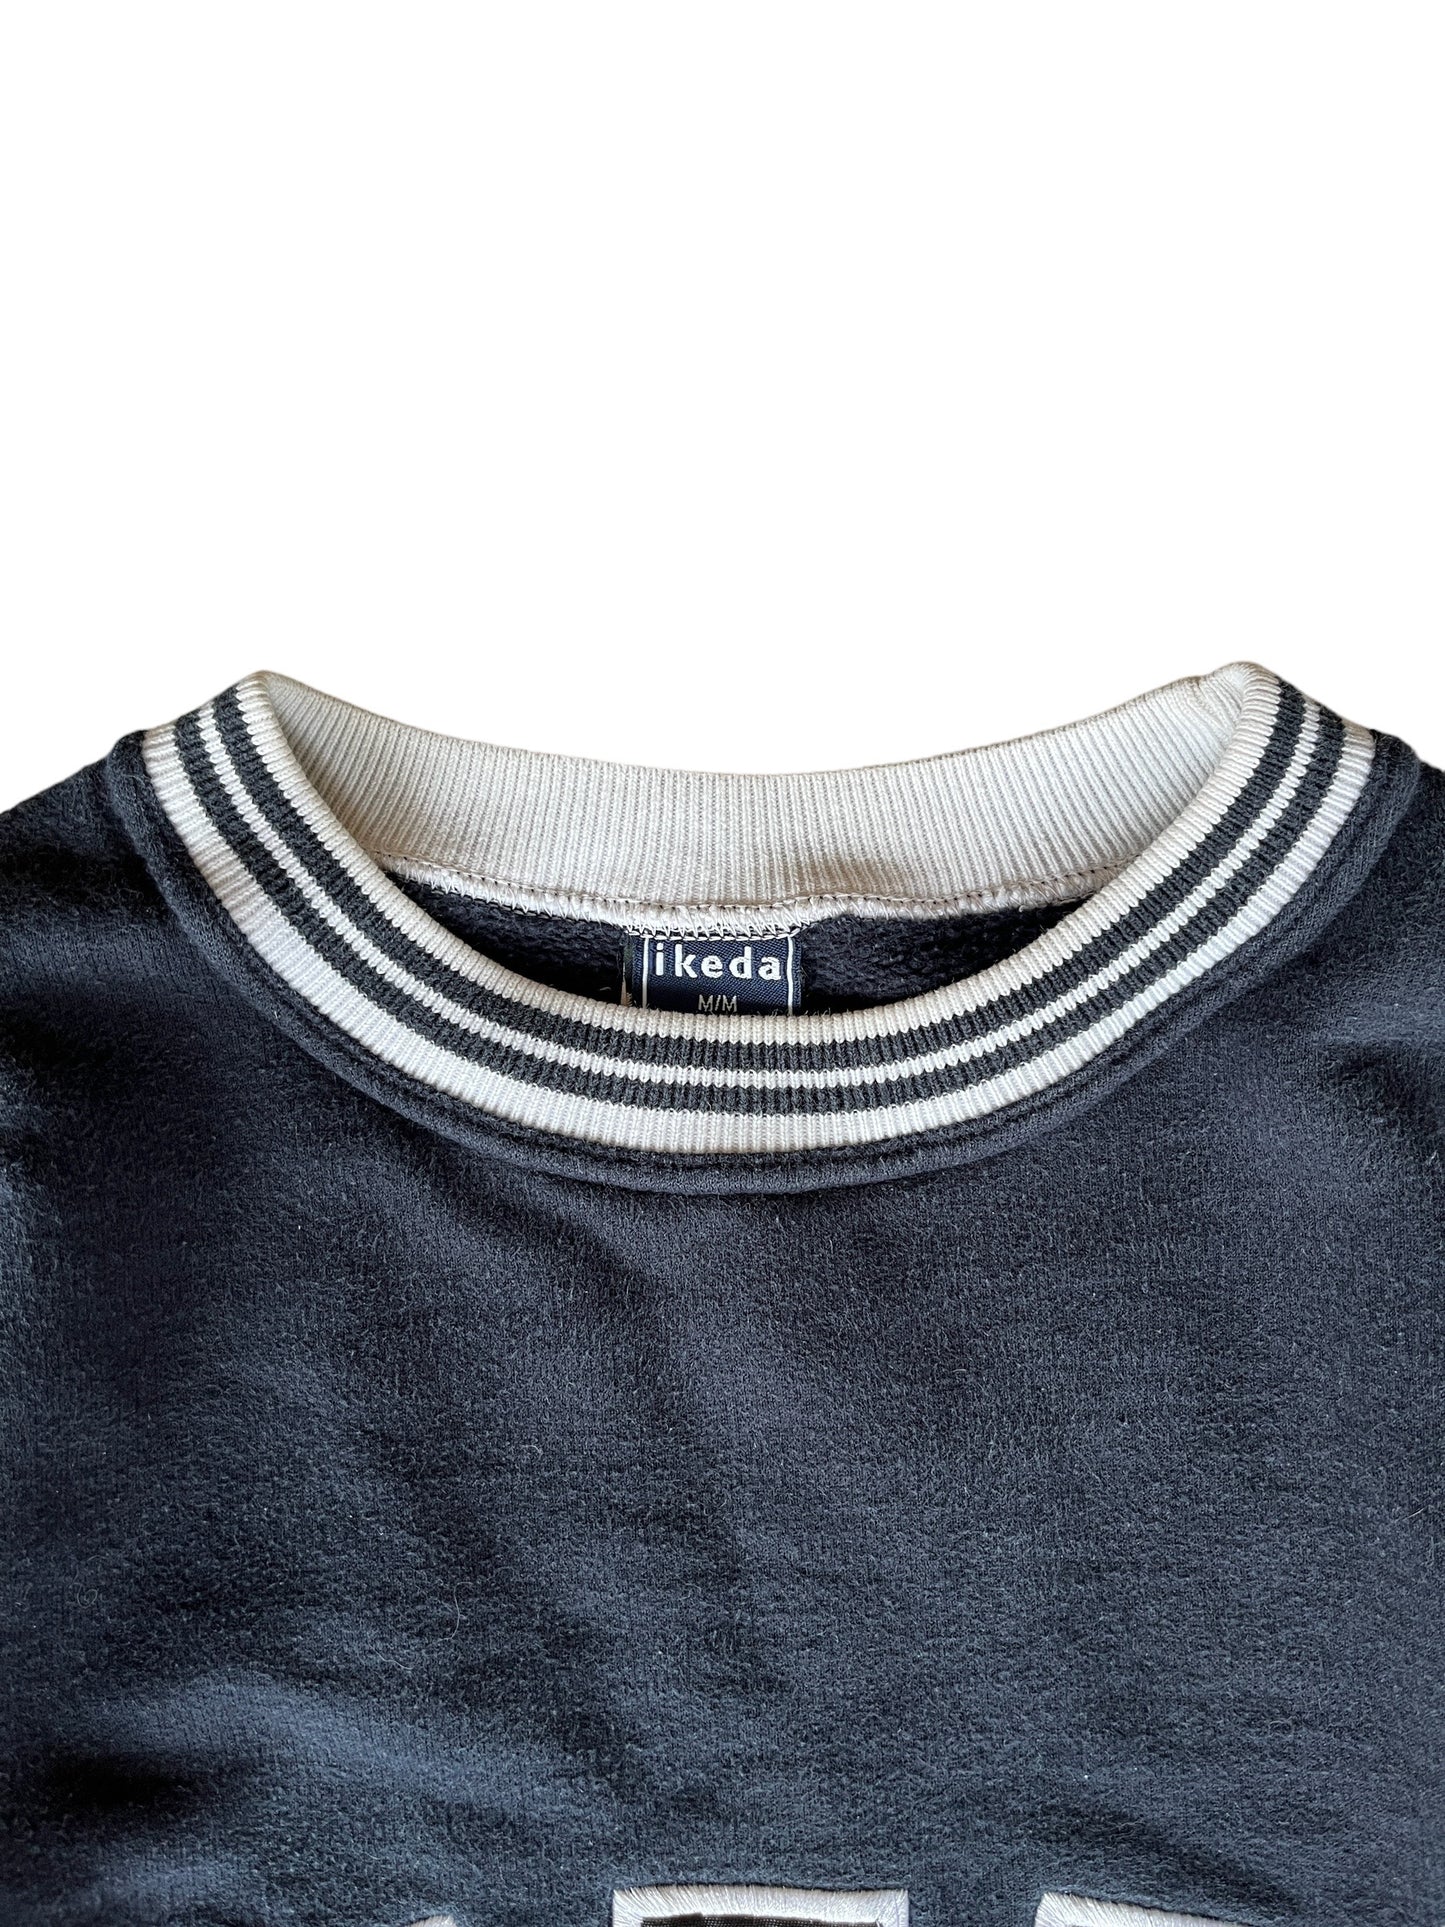 Vintage Ikeda Sweatshirt